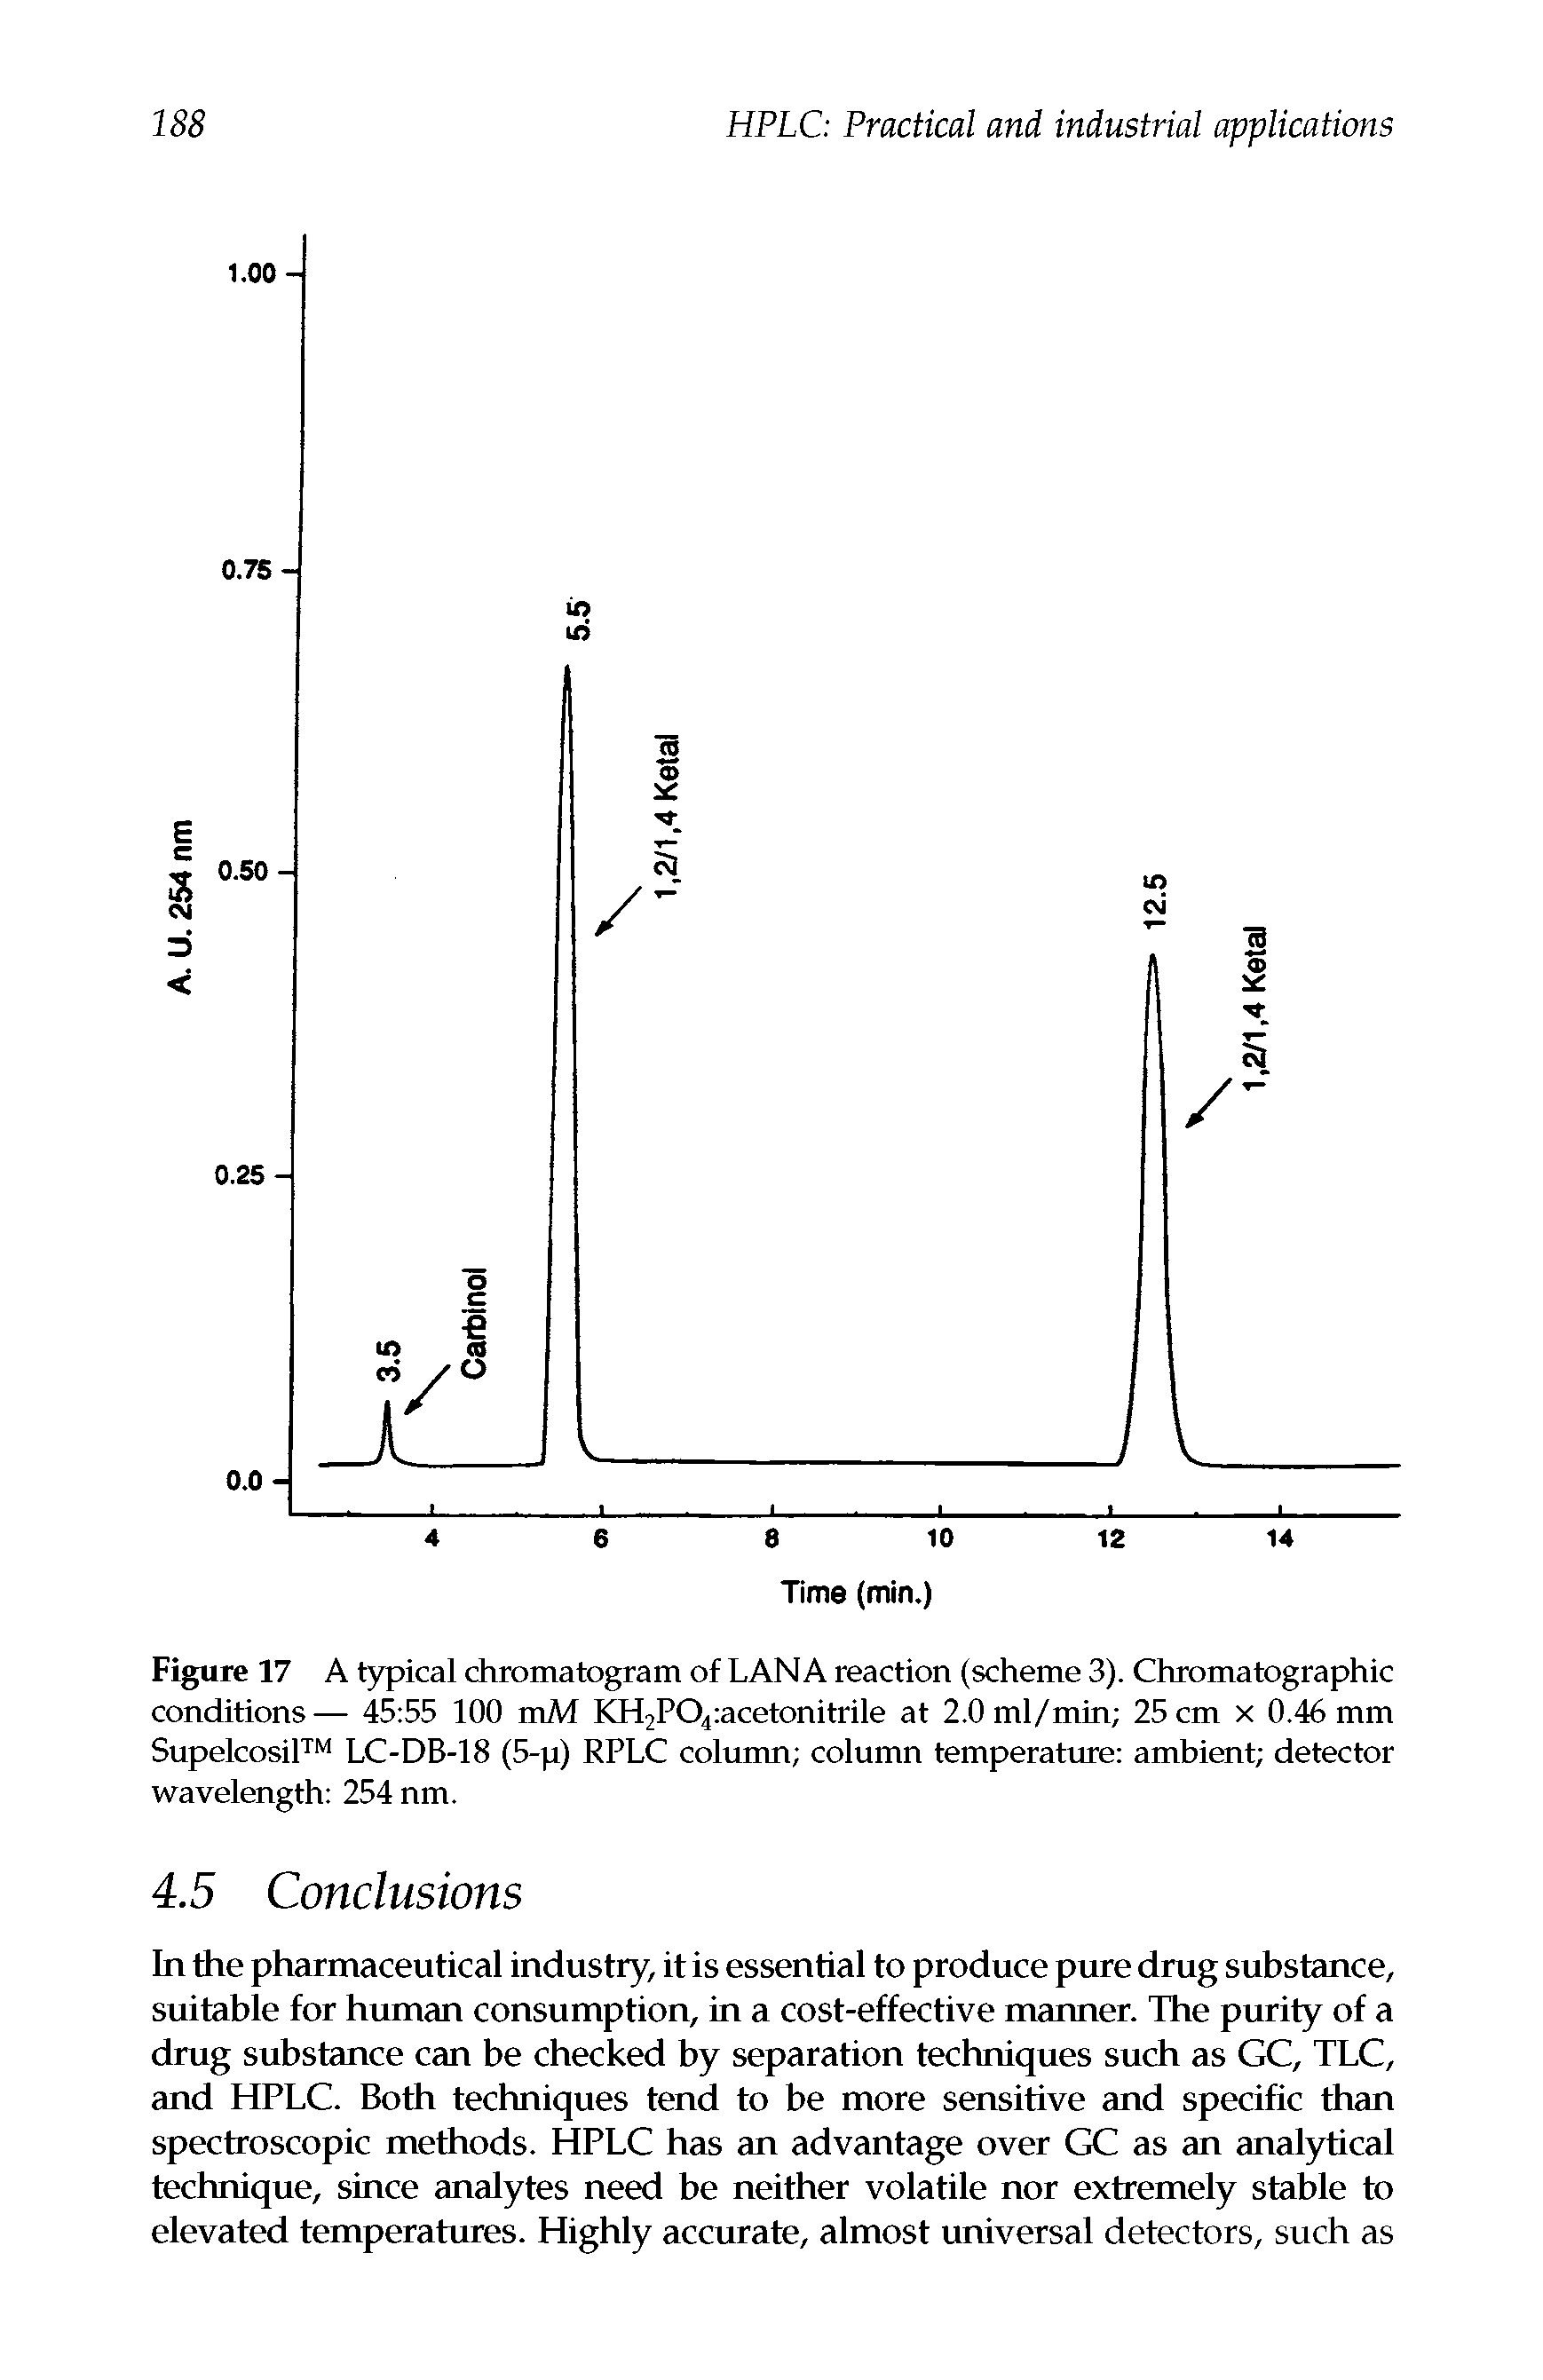 Figure 17 A typical chromatogram of LANA reaction (scheme 3). Chromatographic conditions— 45 55 100 mM KH2P04 acetonitrile at 2.0ml/min 25 cm x 0.46 mm Supelcosil LC-DB-18 (5-p) RPLC column column temperature ambient detector wavelength 254 nm.